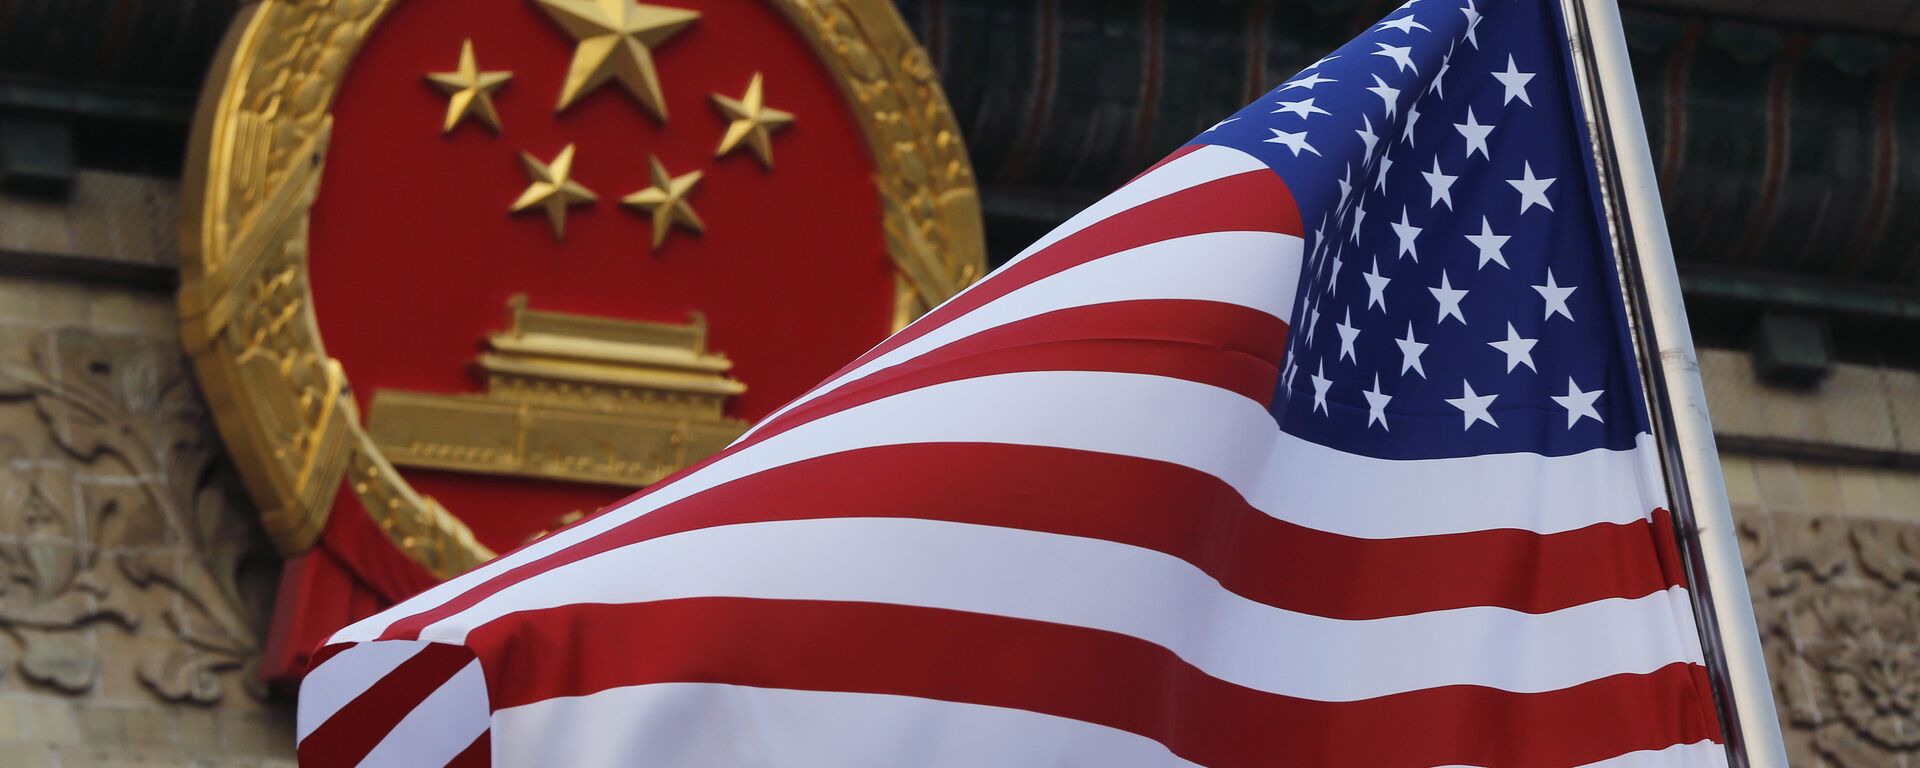 La bandera de EEUU y el emblema de China  - Sputnik Mundo, 1920, 19.07.2021